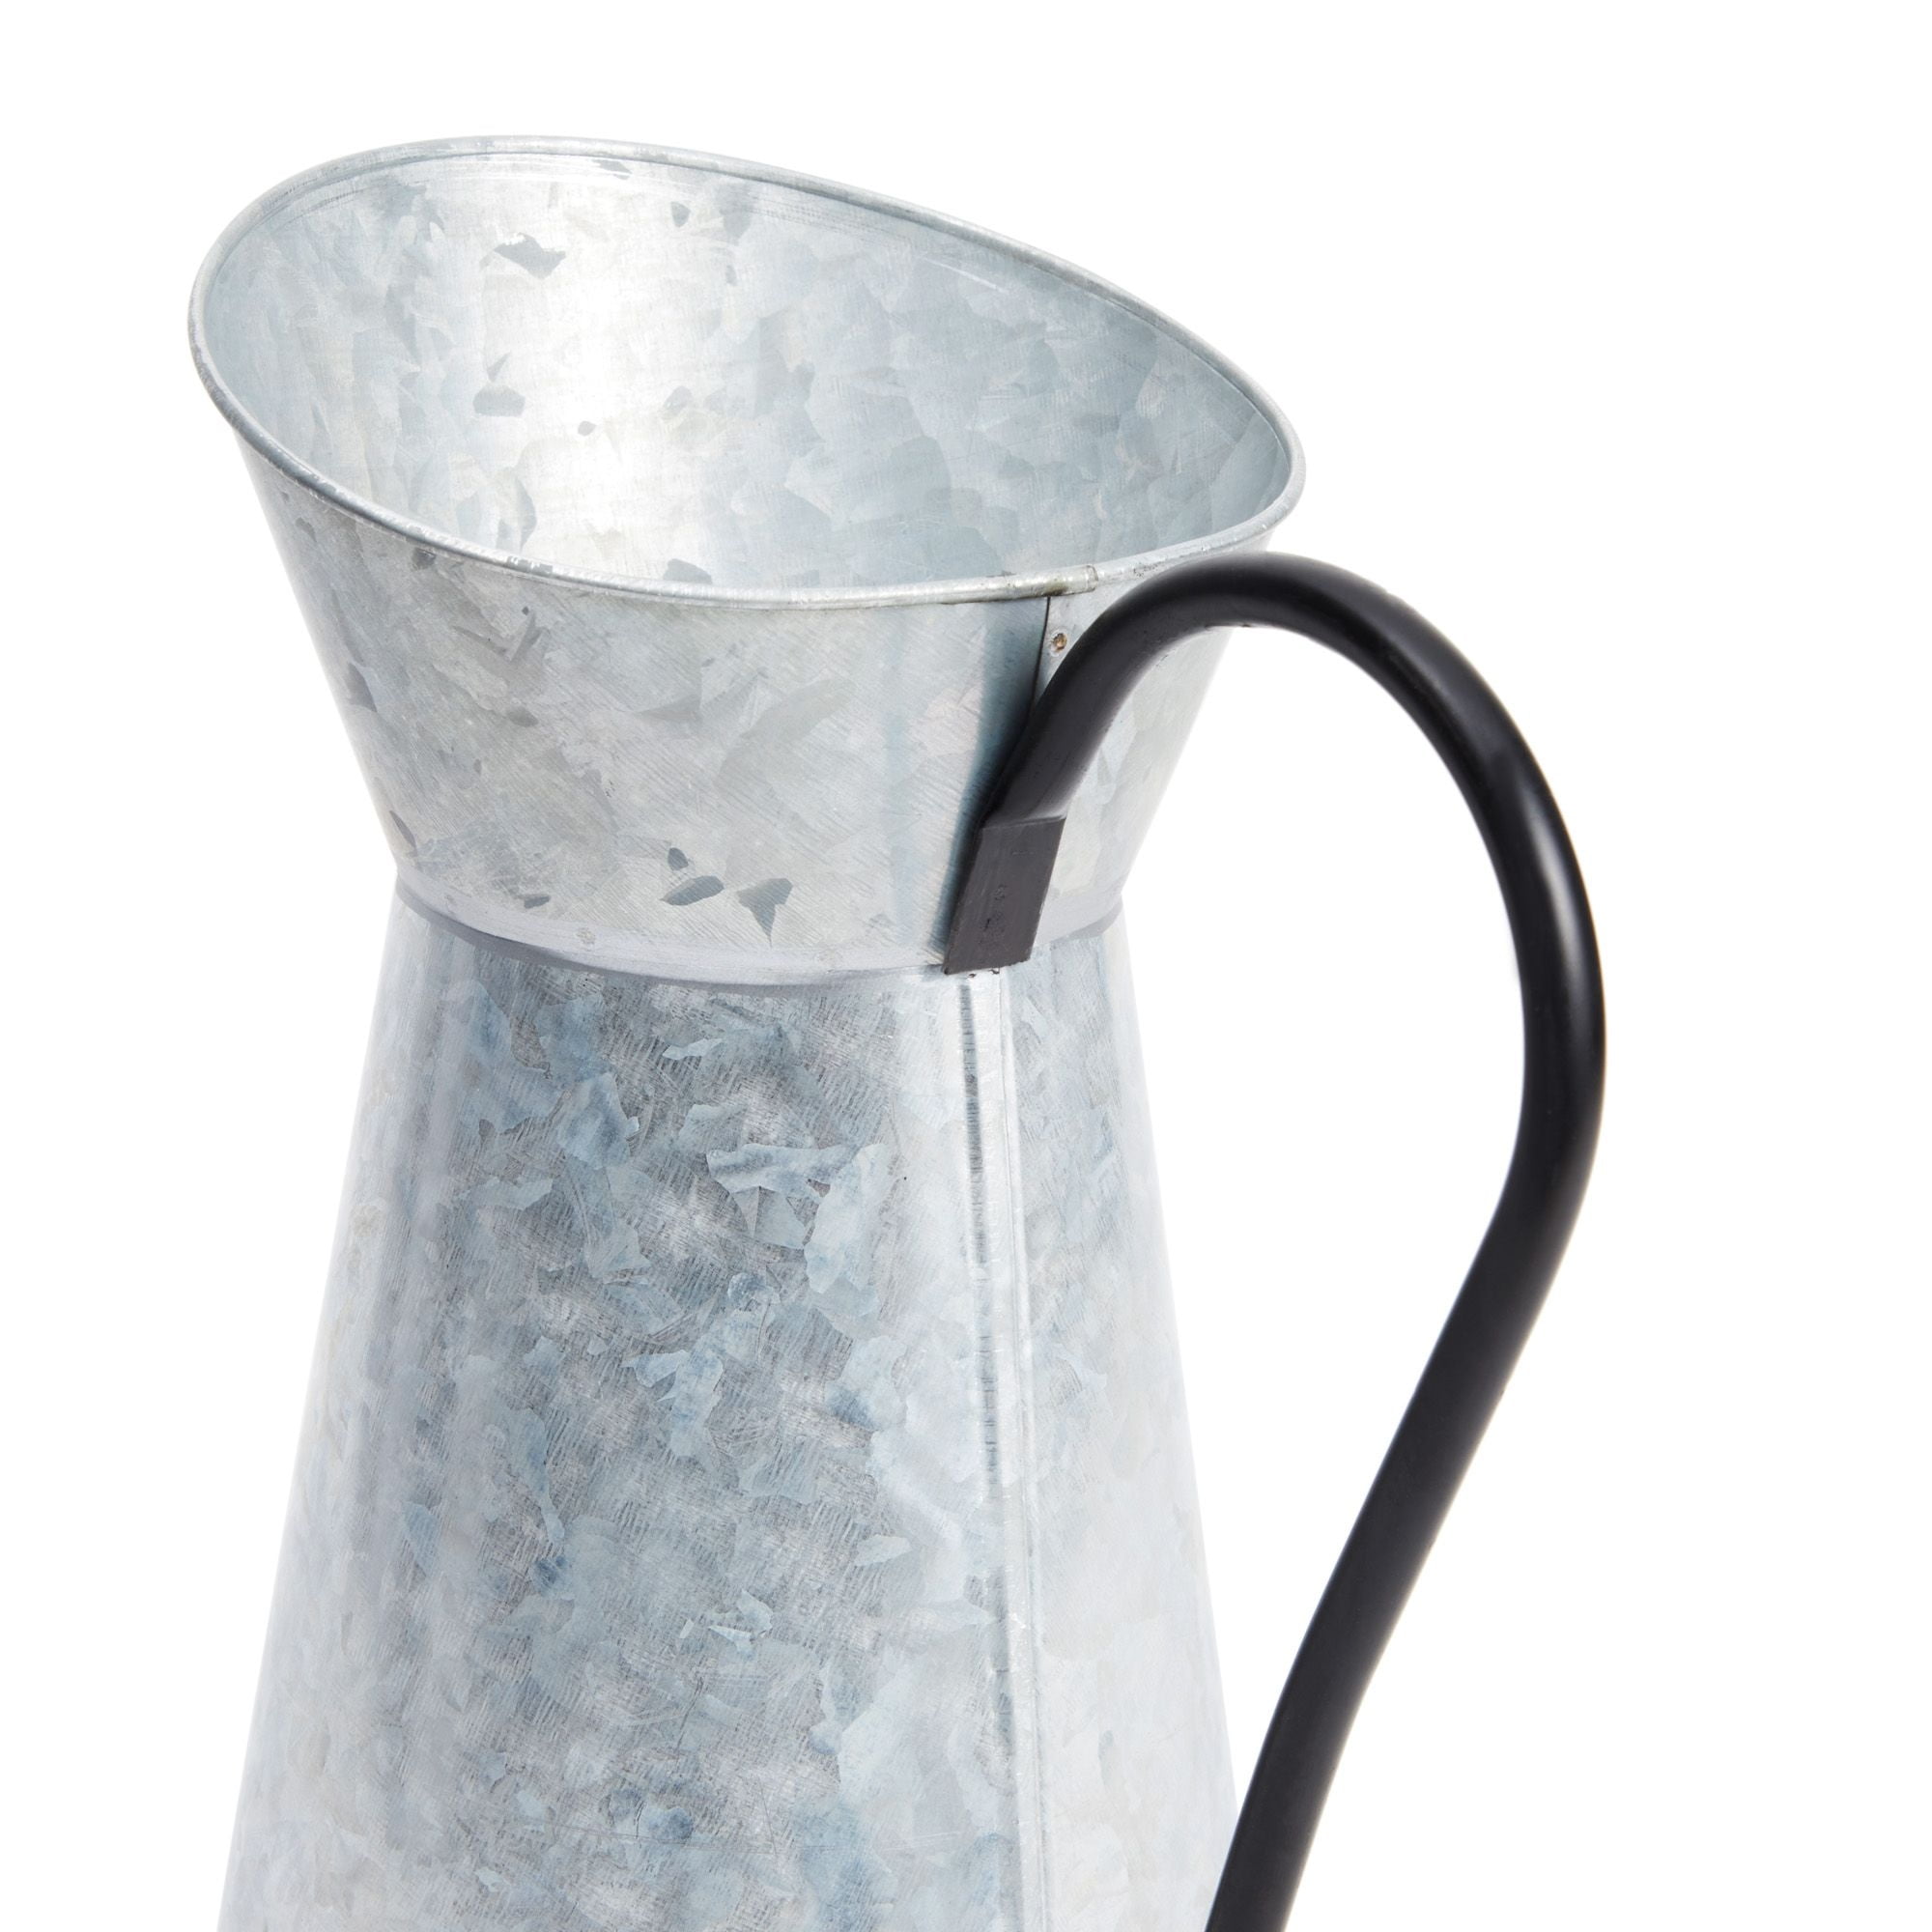 Raz 13 Rustic Galvanized Decorative Metal Pitcher Vase, 1 - Harris Teeter